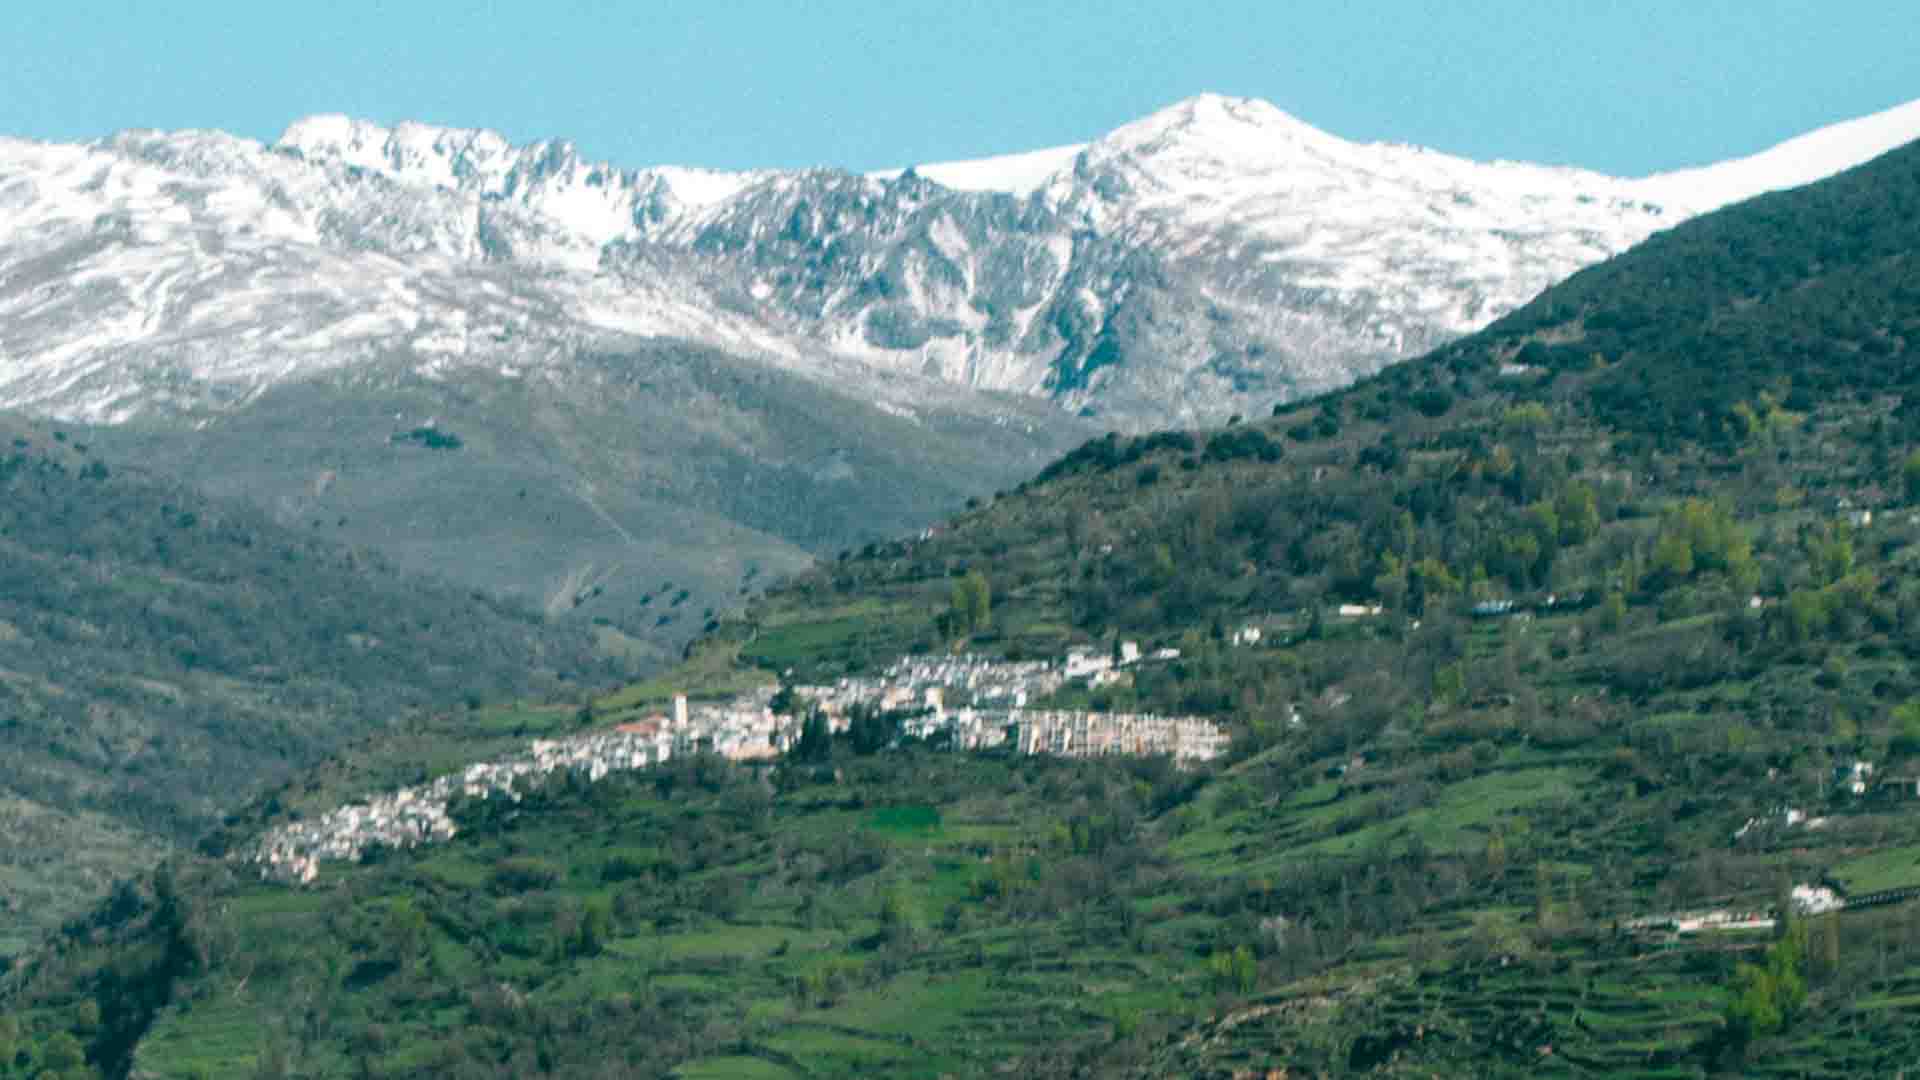 Village of Travelez with Sierra Nevada mountains in snow in background